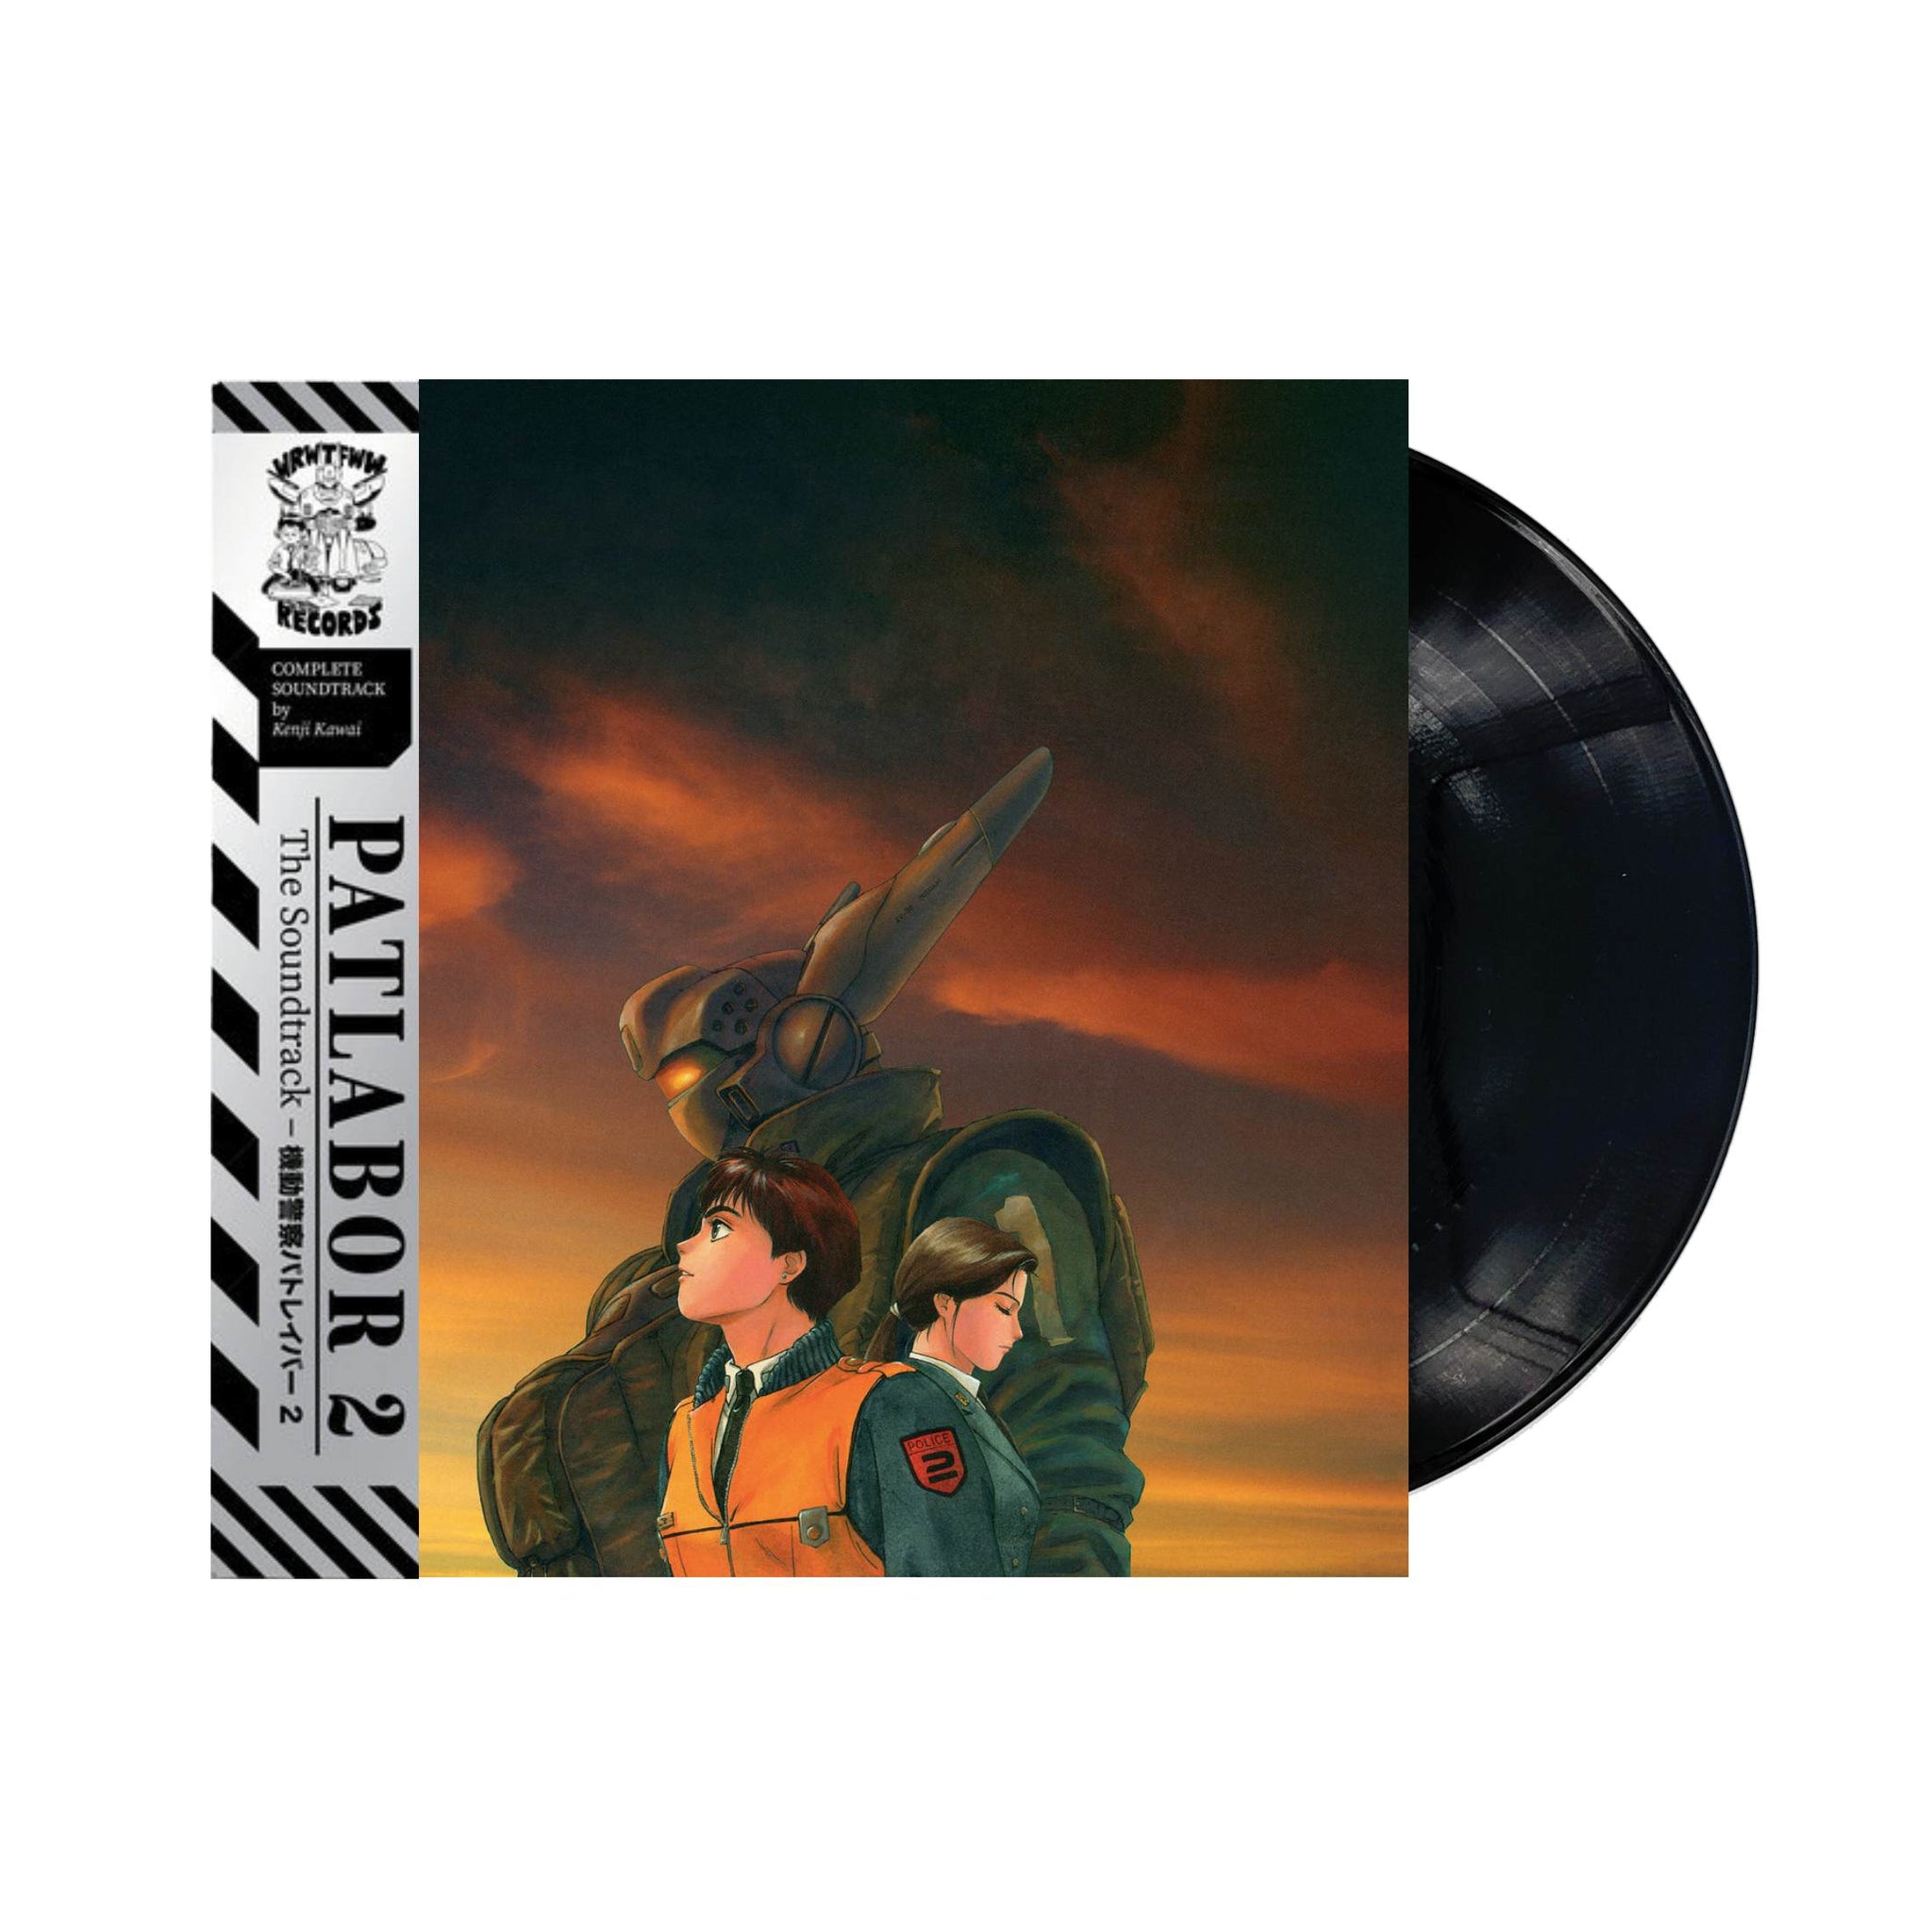 Kenji Kawai - Patlabor 2 - The Movie (Original Soundtrack vinyl) LP